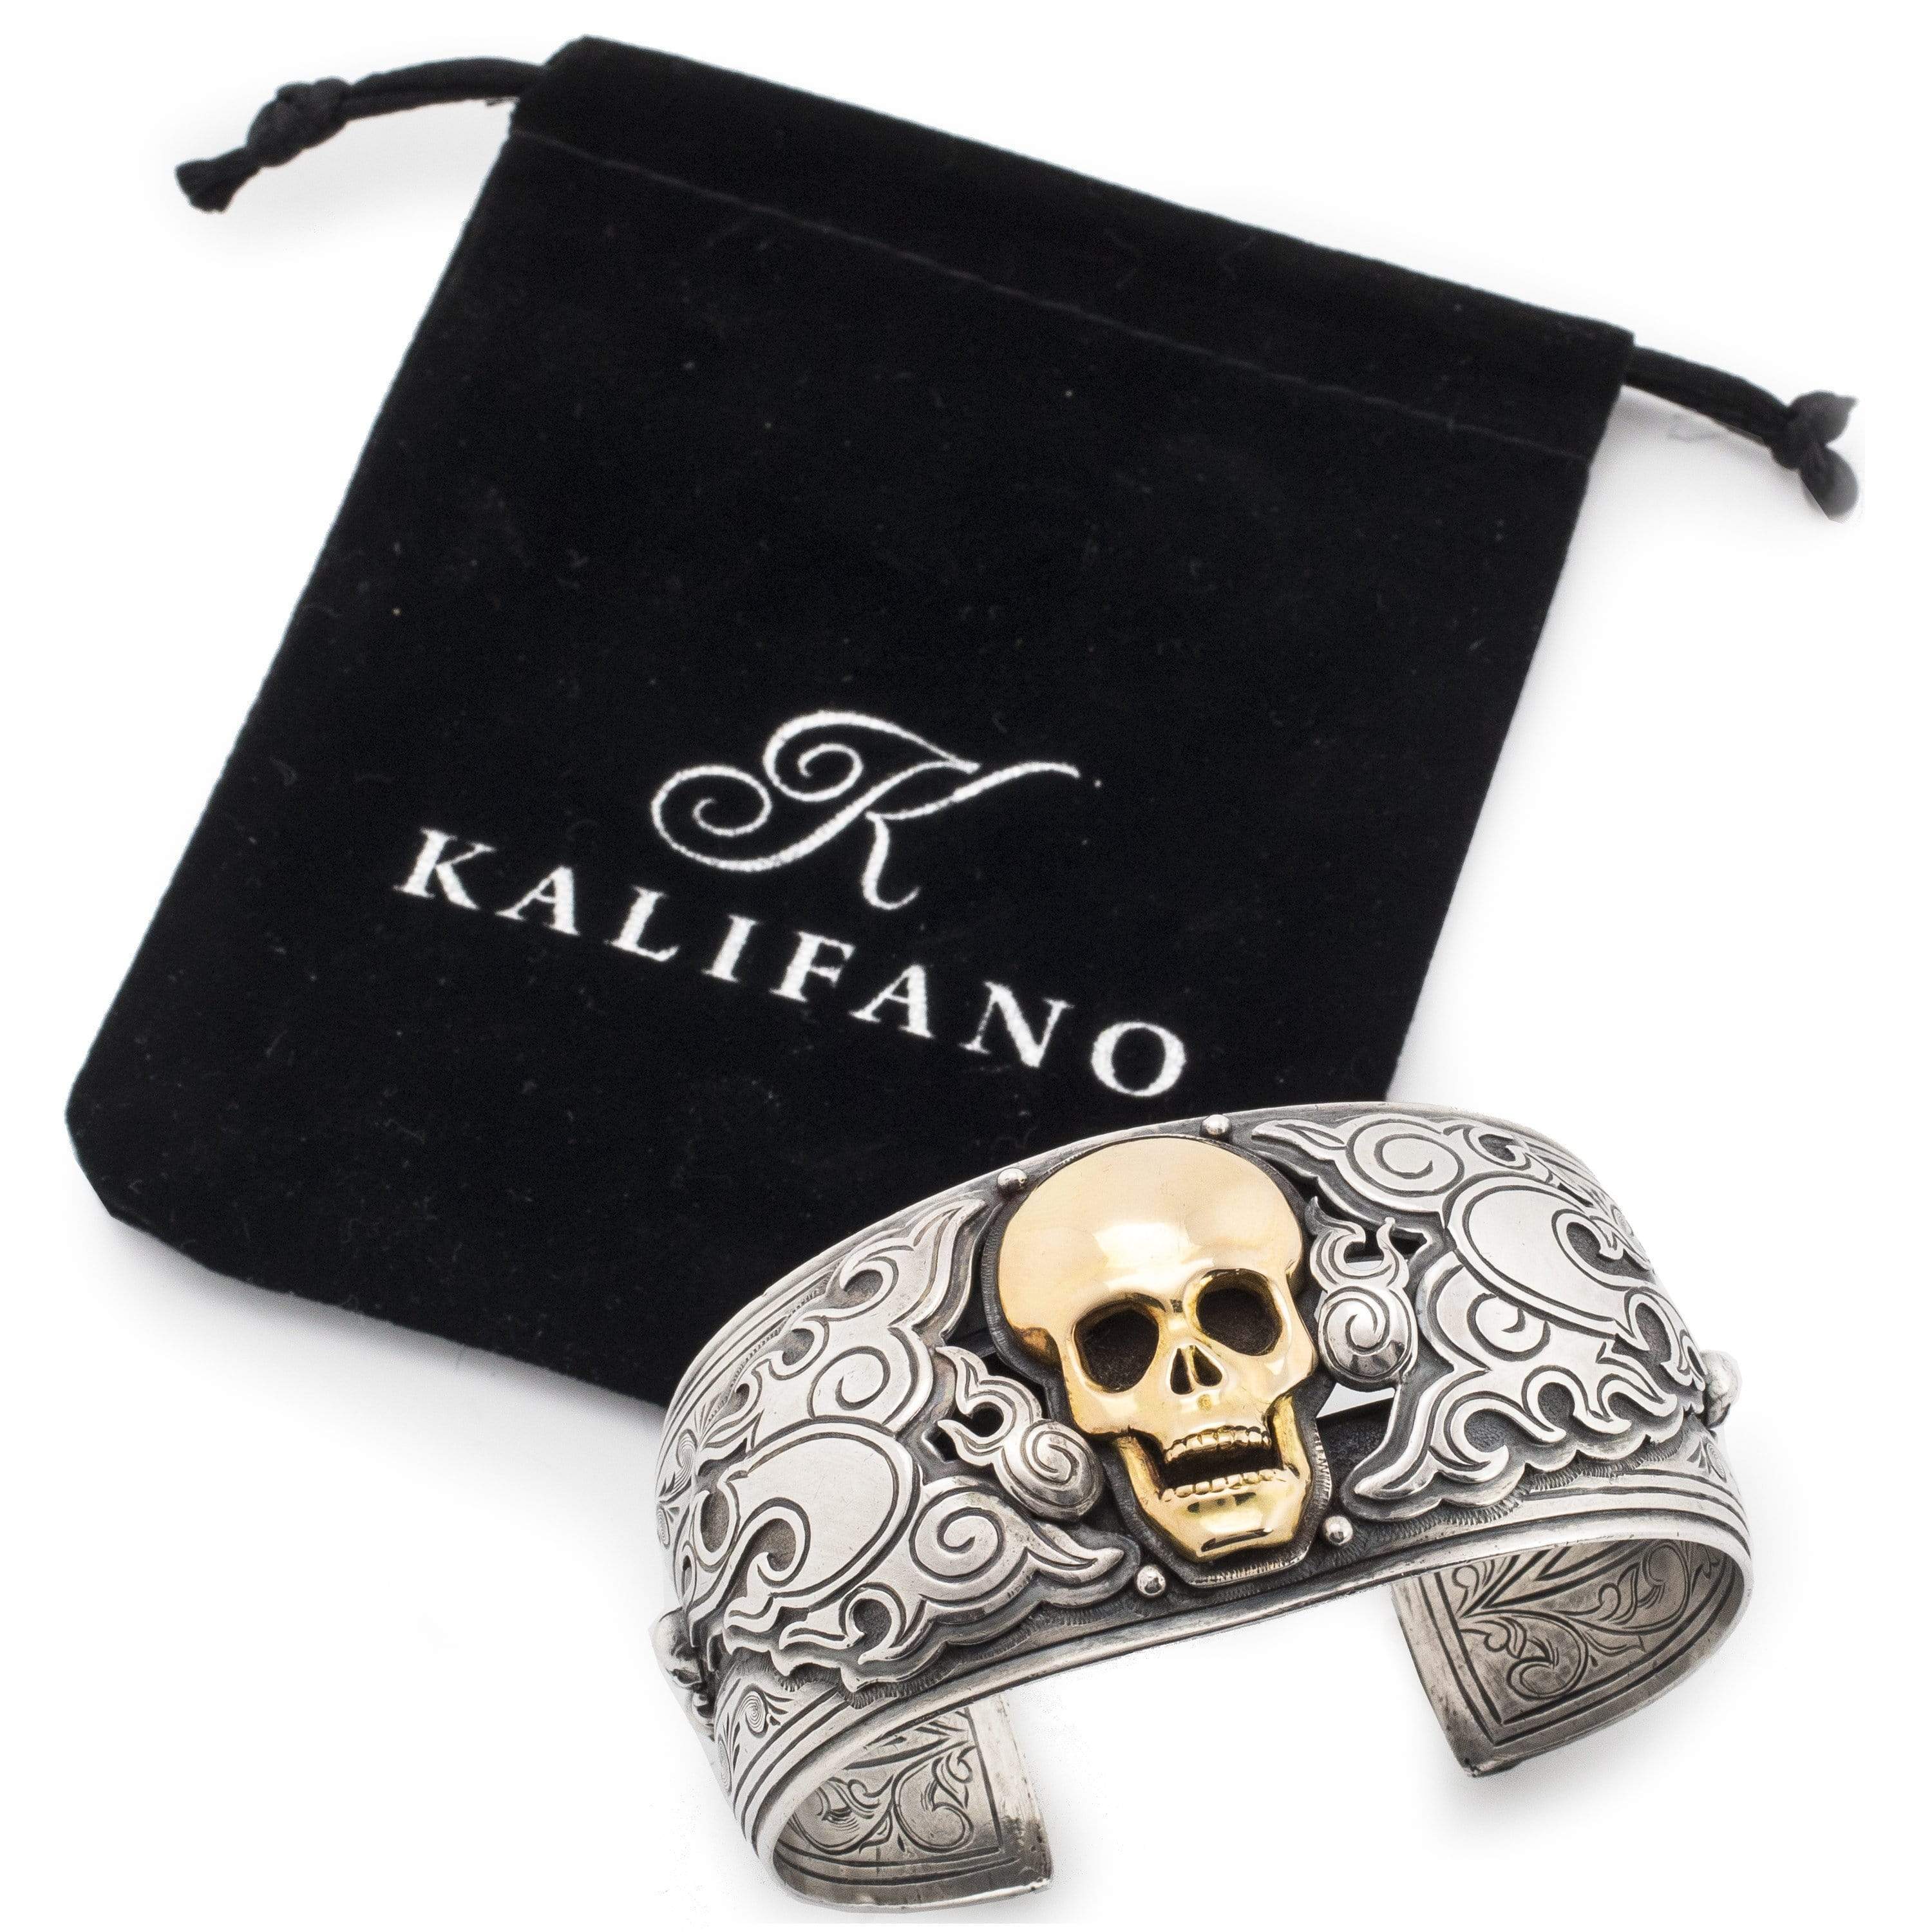 Kalifano Native American Jewelry Mona Van Riper 18k Gold Skull USA Native American Made 925 Sterling Silver Cuff NAB24500.001